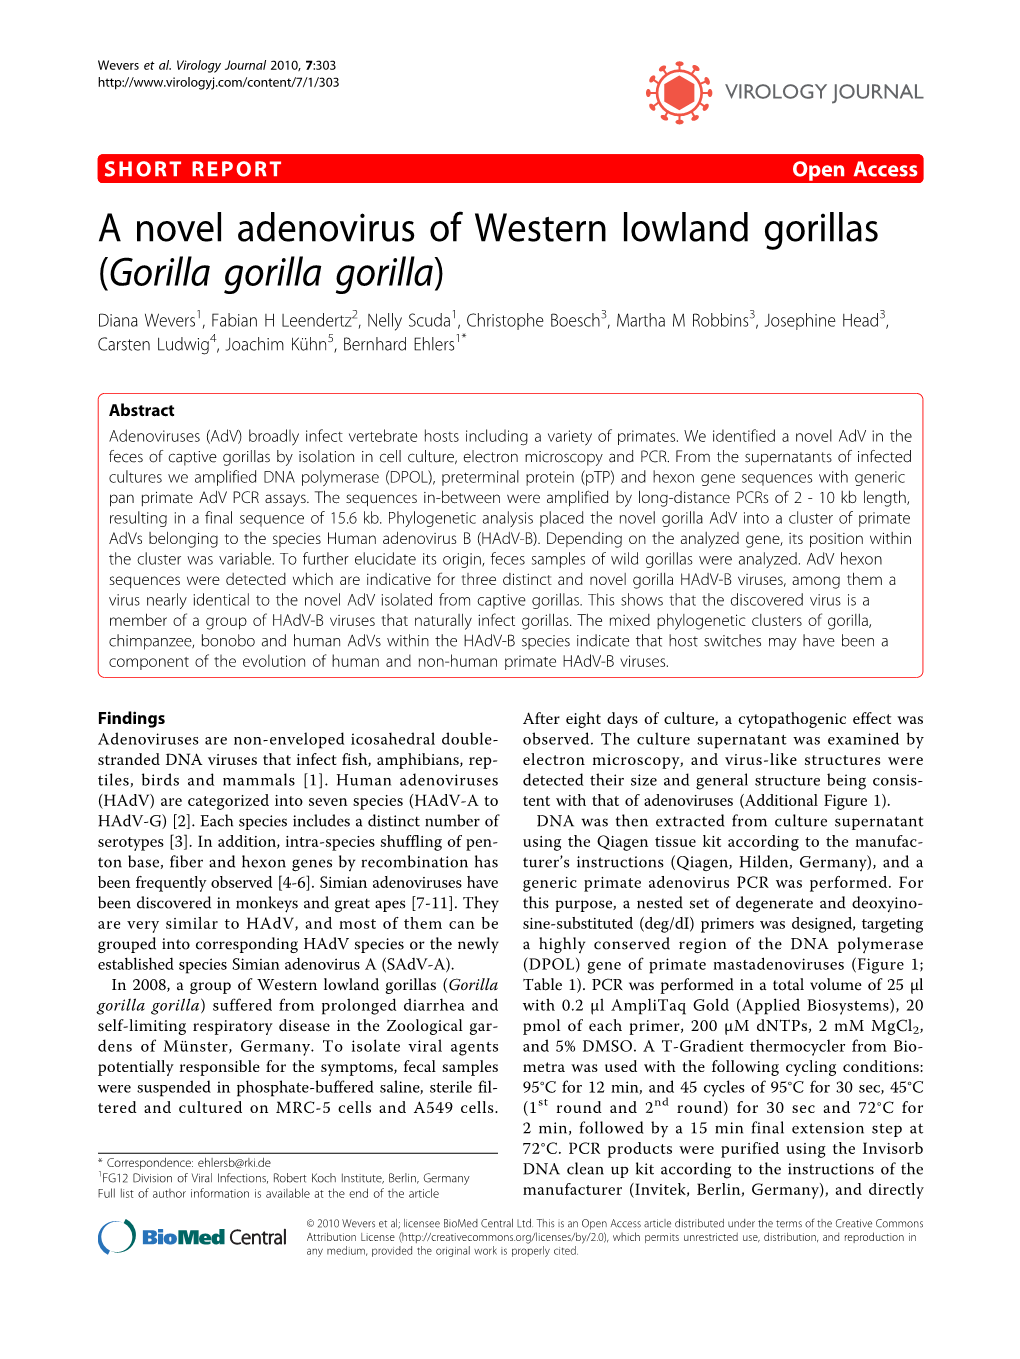 A Novel Adenovirus of Western Lowland Gorillas (Gorilla Gorilla Gorilla)